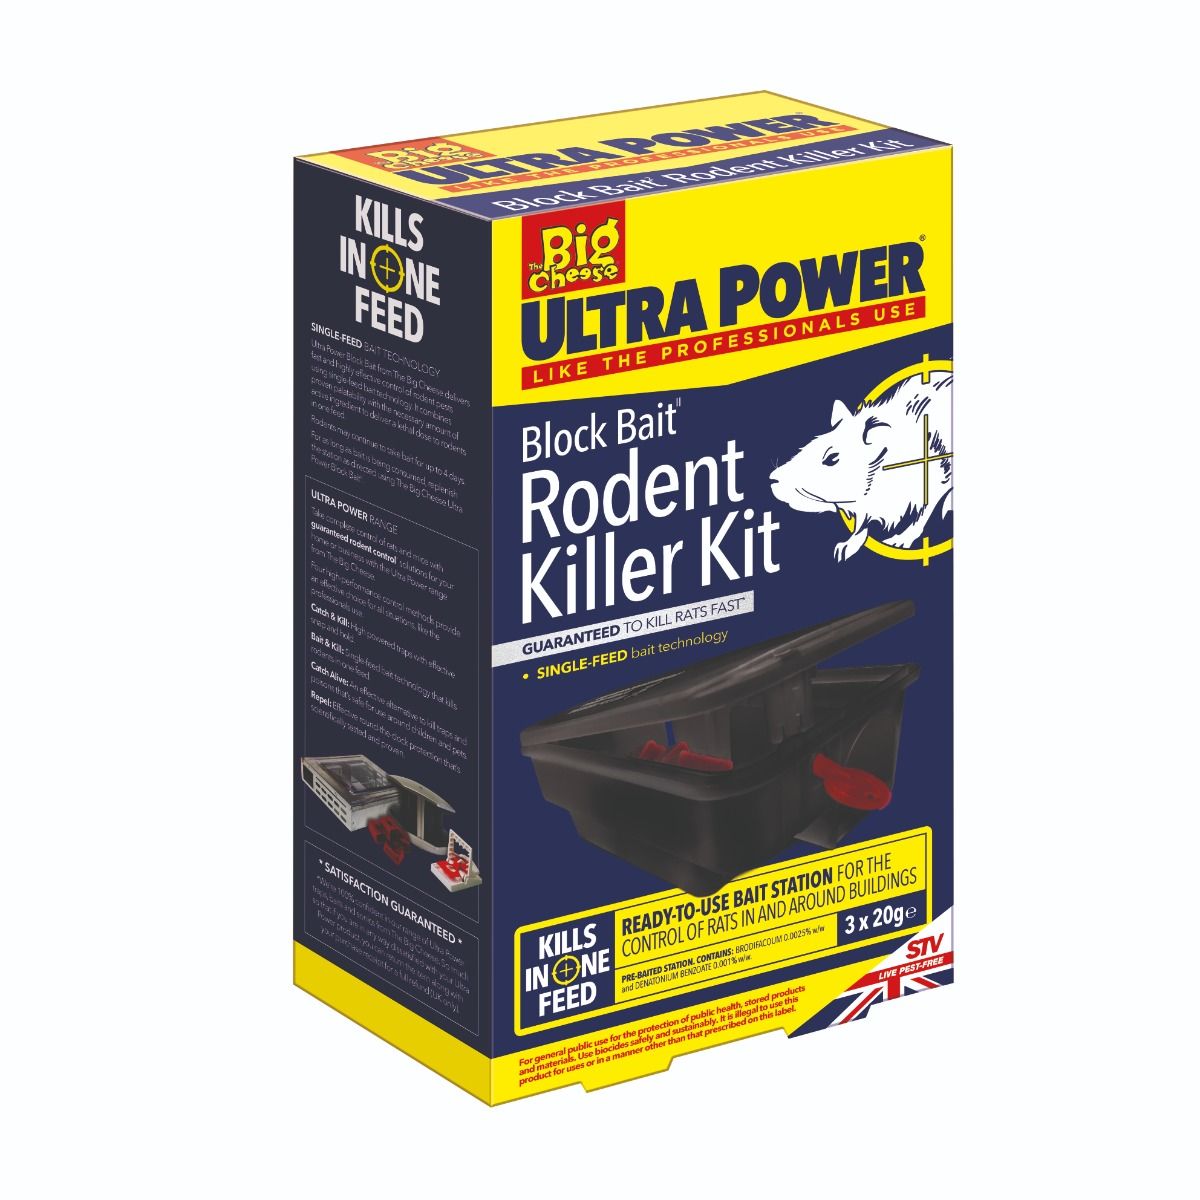 Big-Cheese-Ultra-Power-Block-Bait-Rodent-Killer-Kit